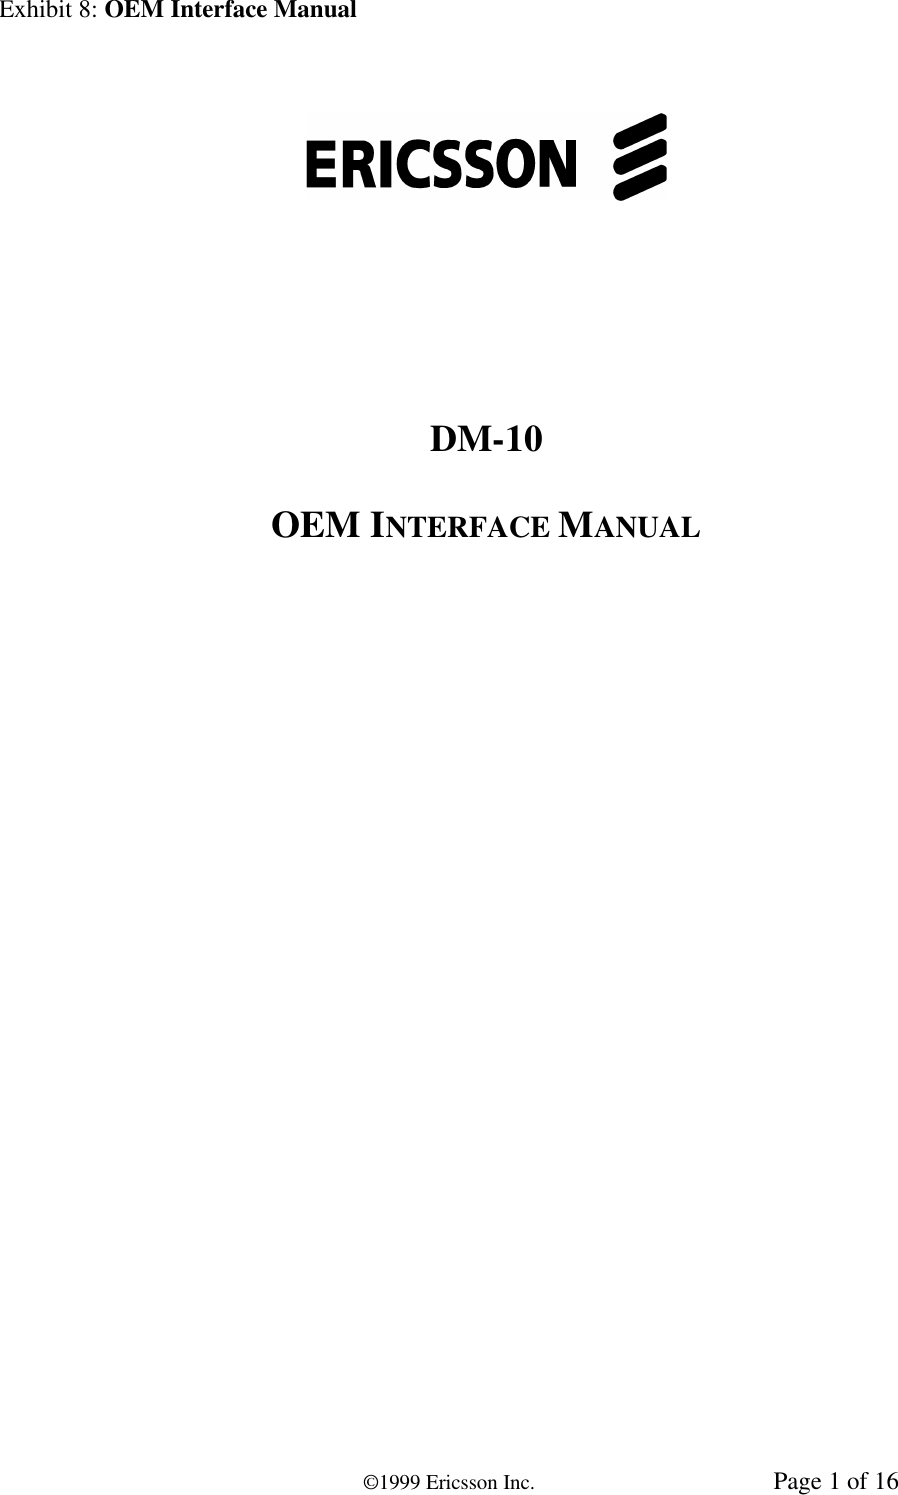 Exhibit 8: OEM Interface Manual©1999 Ericsson Inc. Page 1 of 16DM-10OEM INTERFACE MANUAL